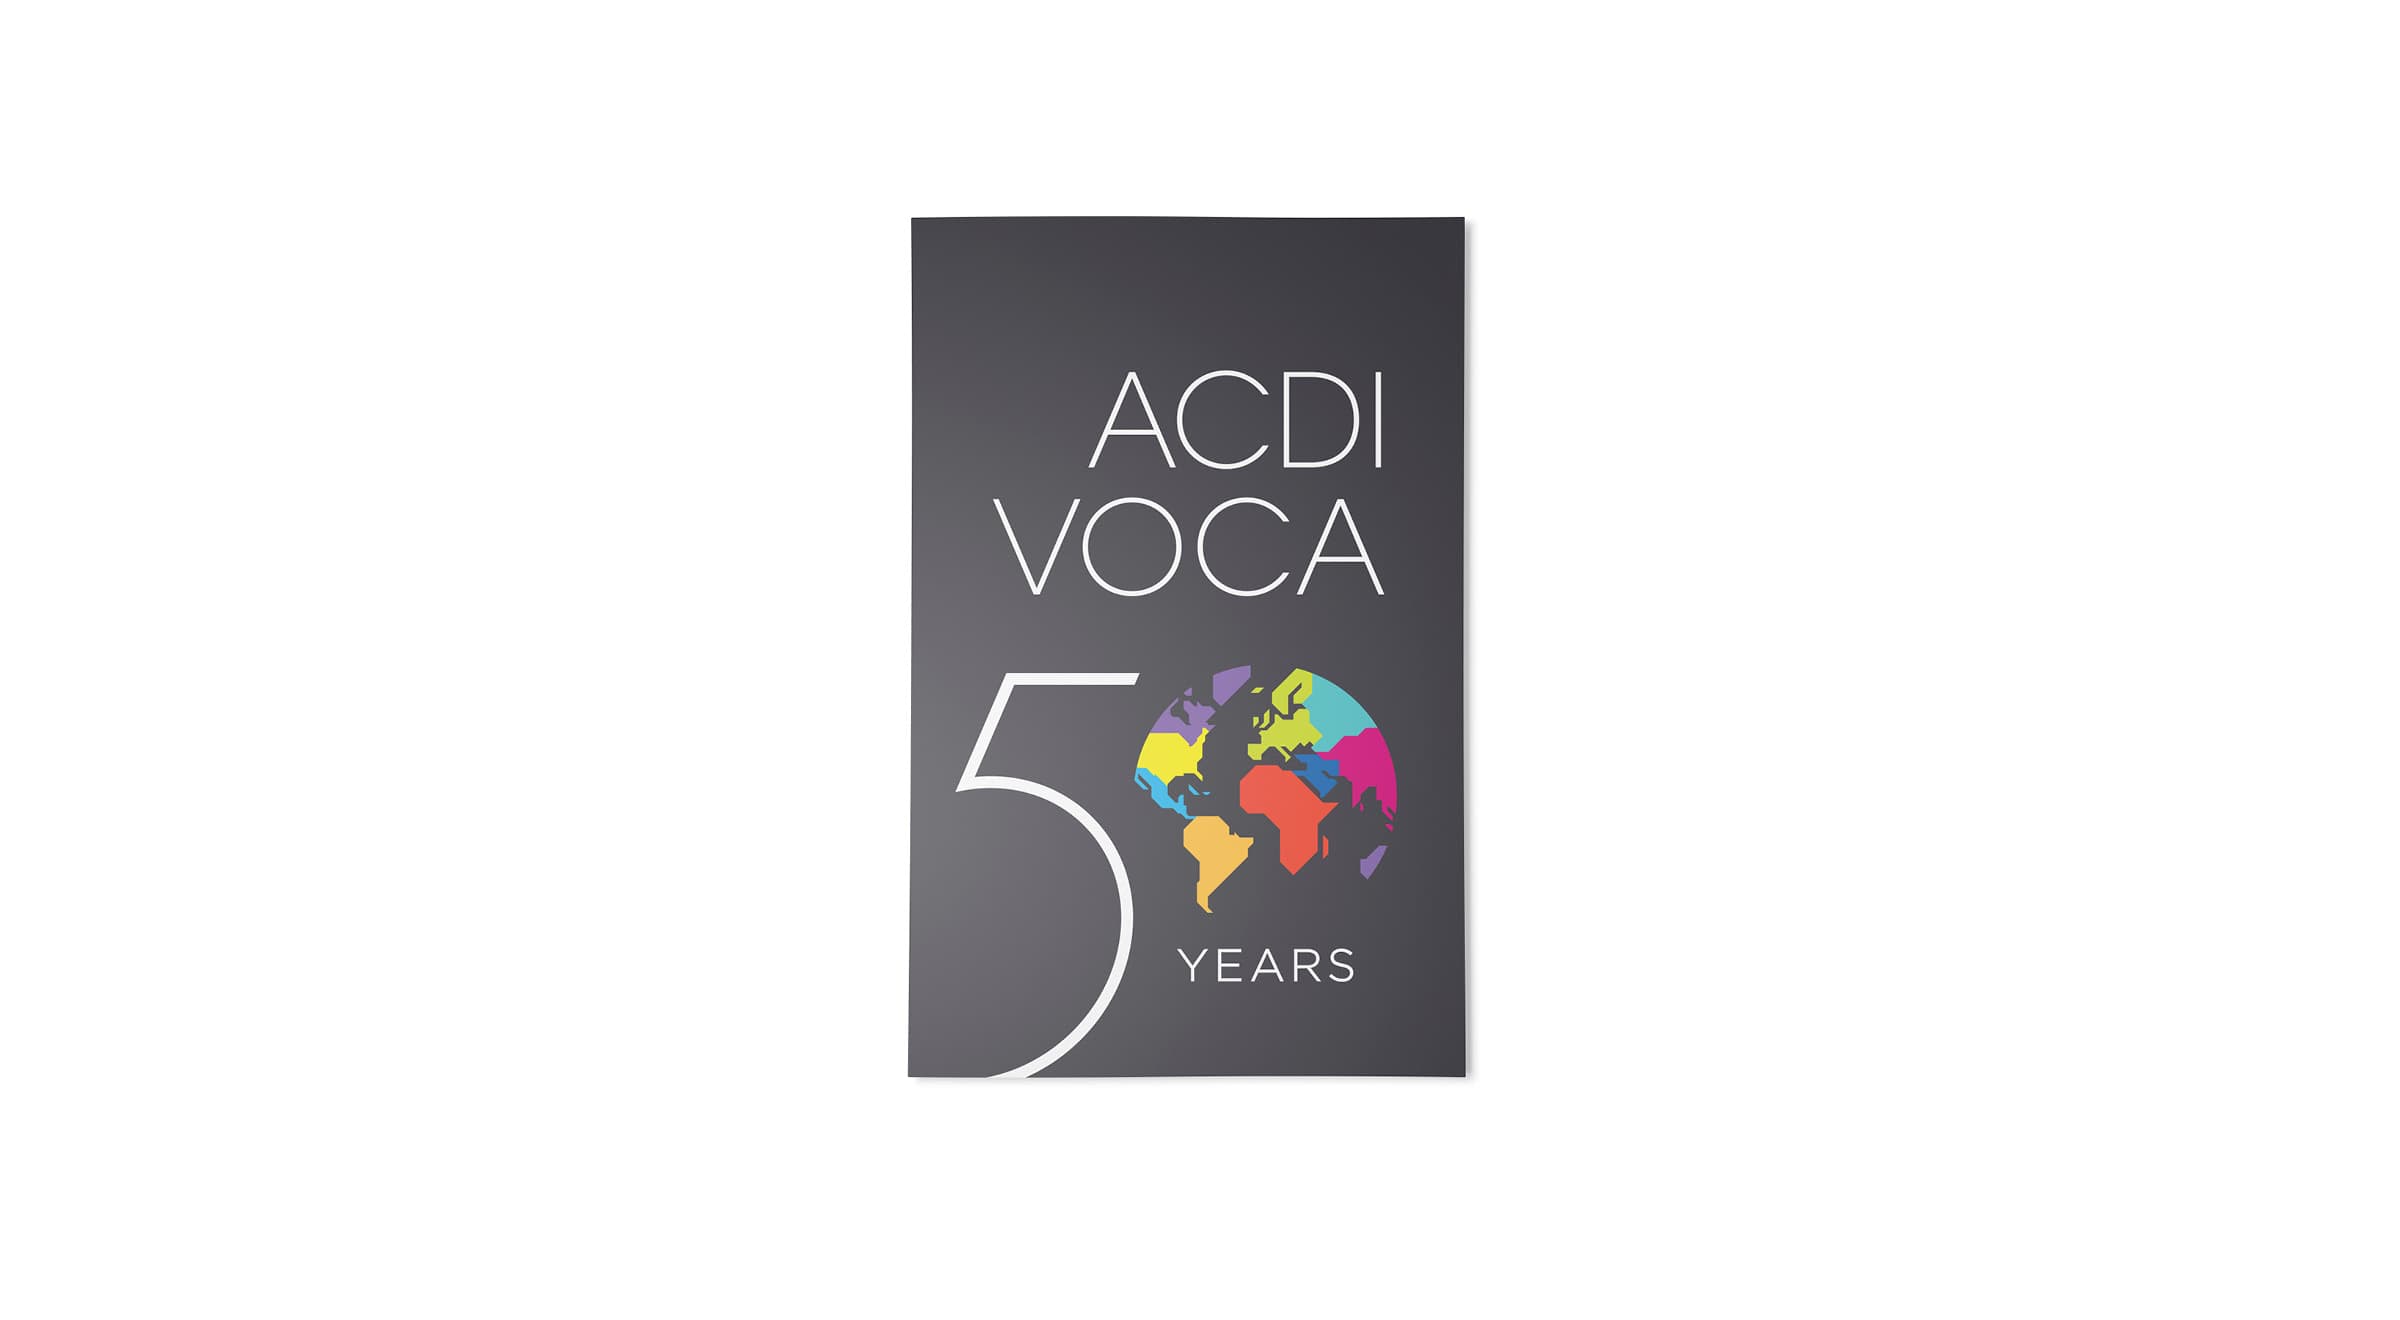 ACDI/VOCA Logo